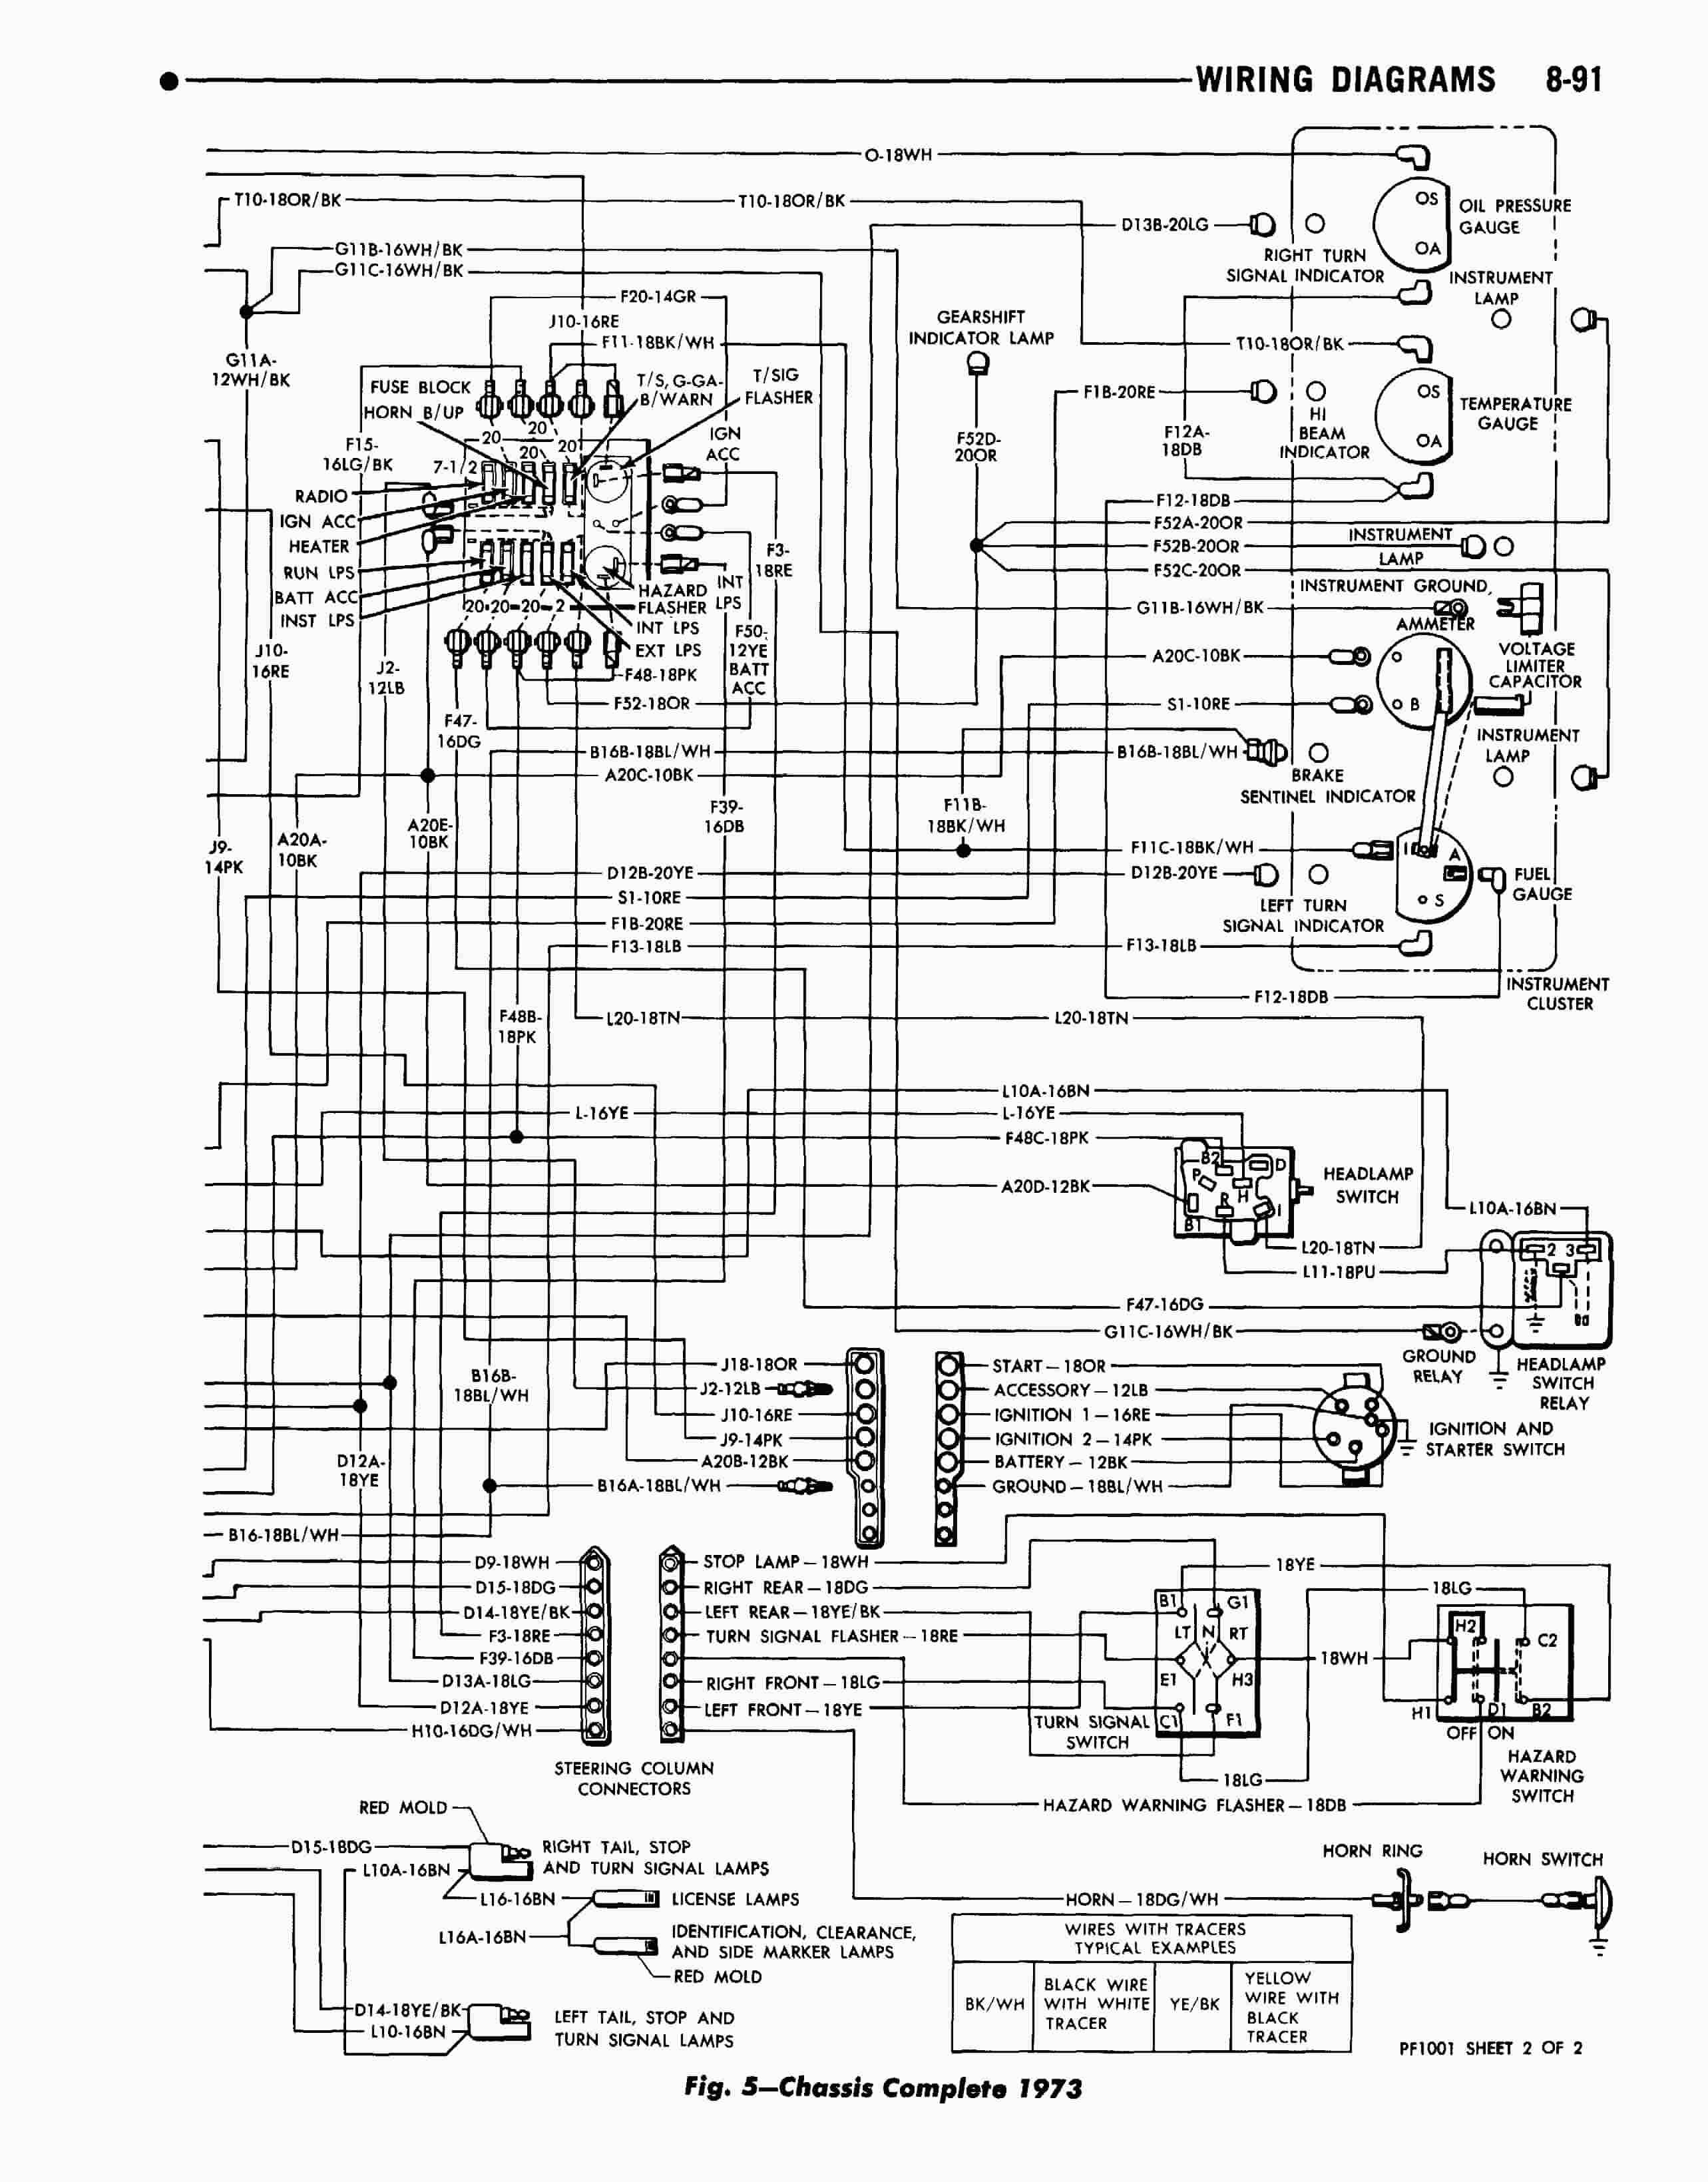 1976 Chevy Truck Wiring Diagram 1985 Chevy Winnebago Wiring Diagram Winnebago Motorhome Wiring Of 1976 Chevy Truck Wiring Diagram